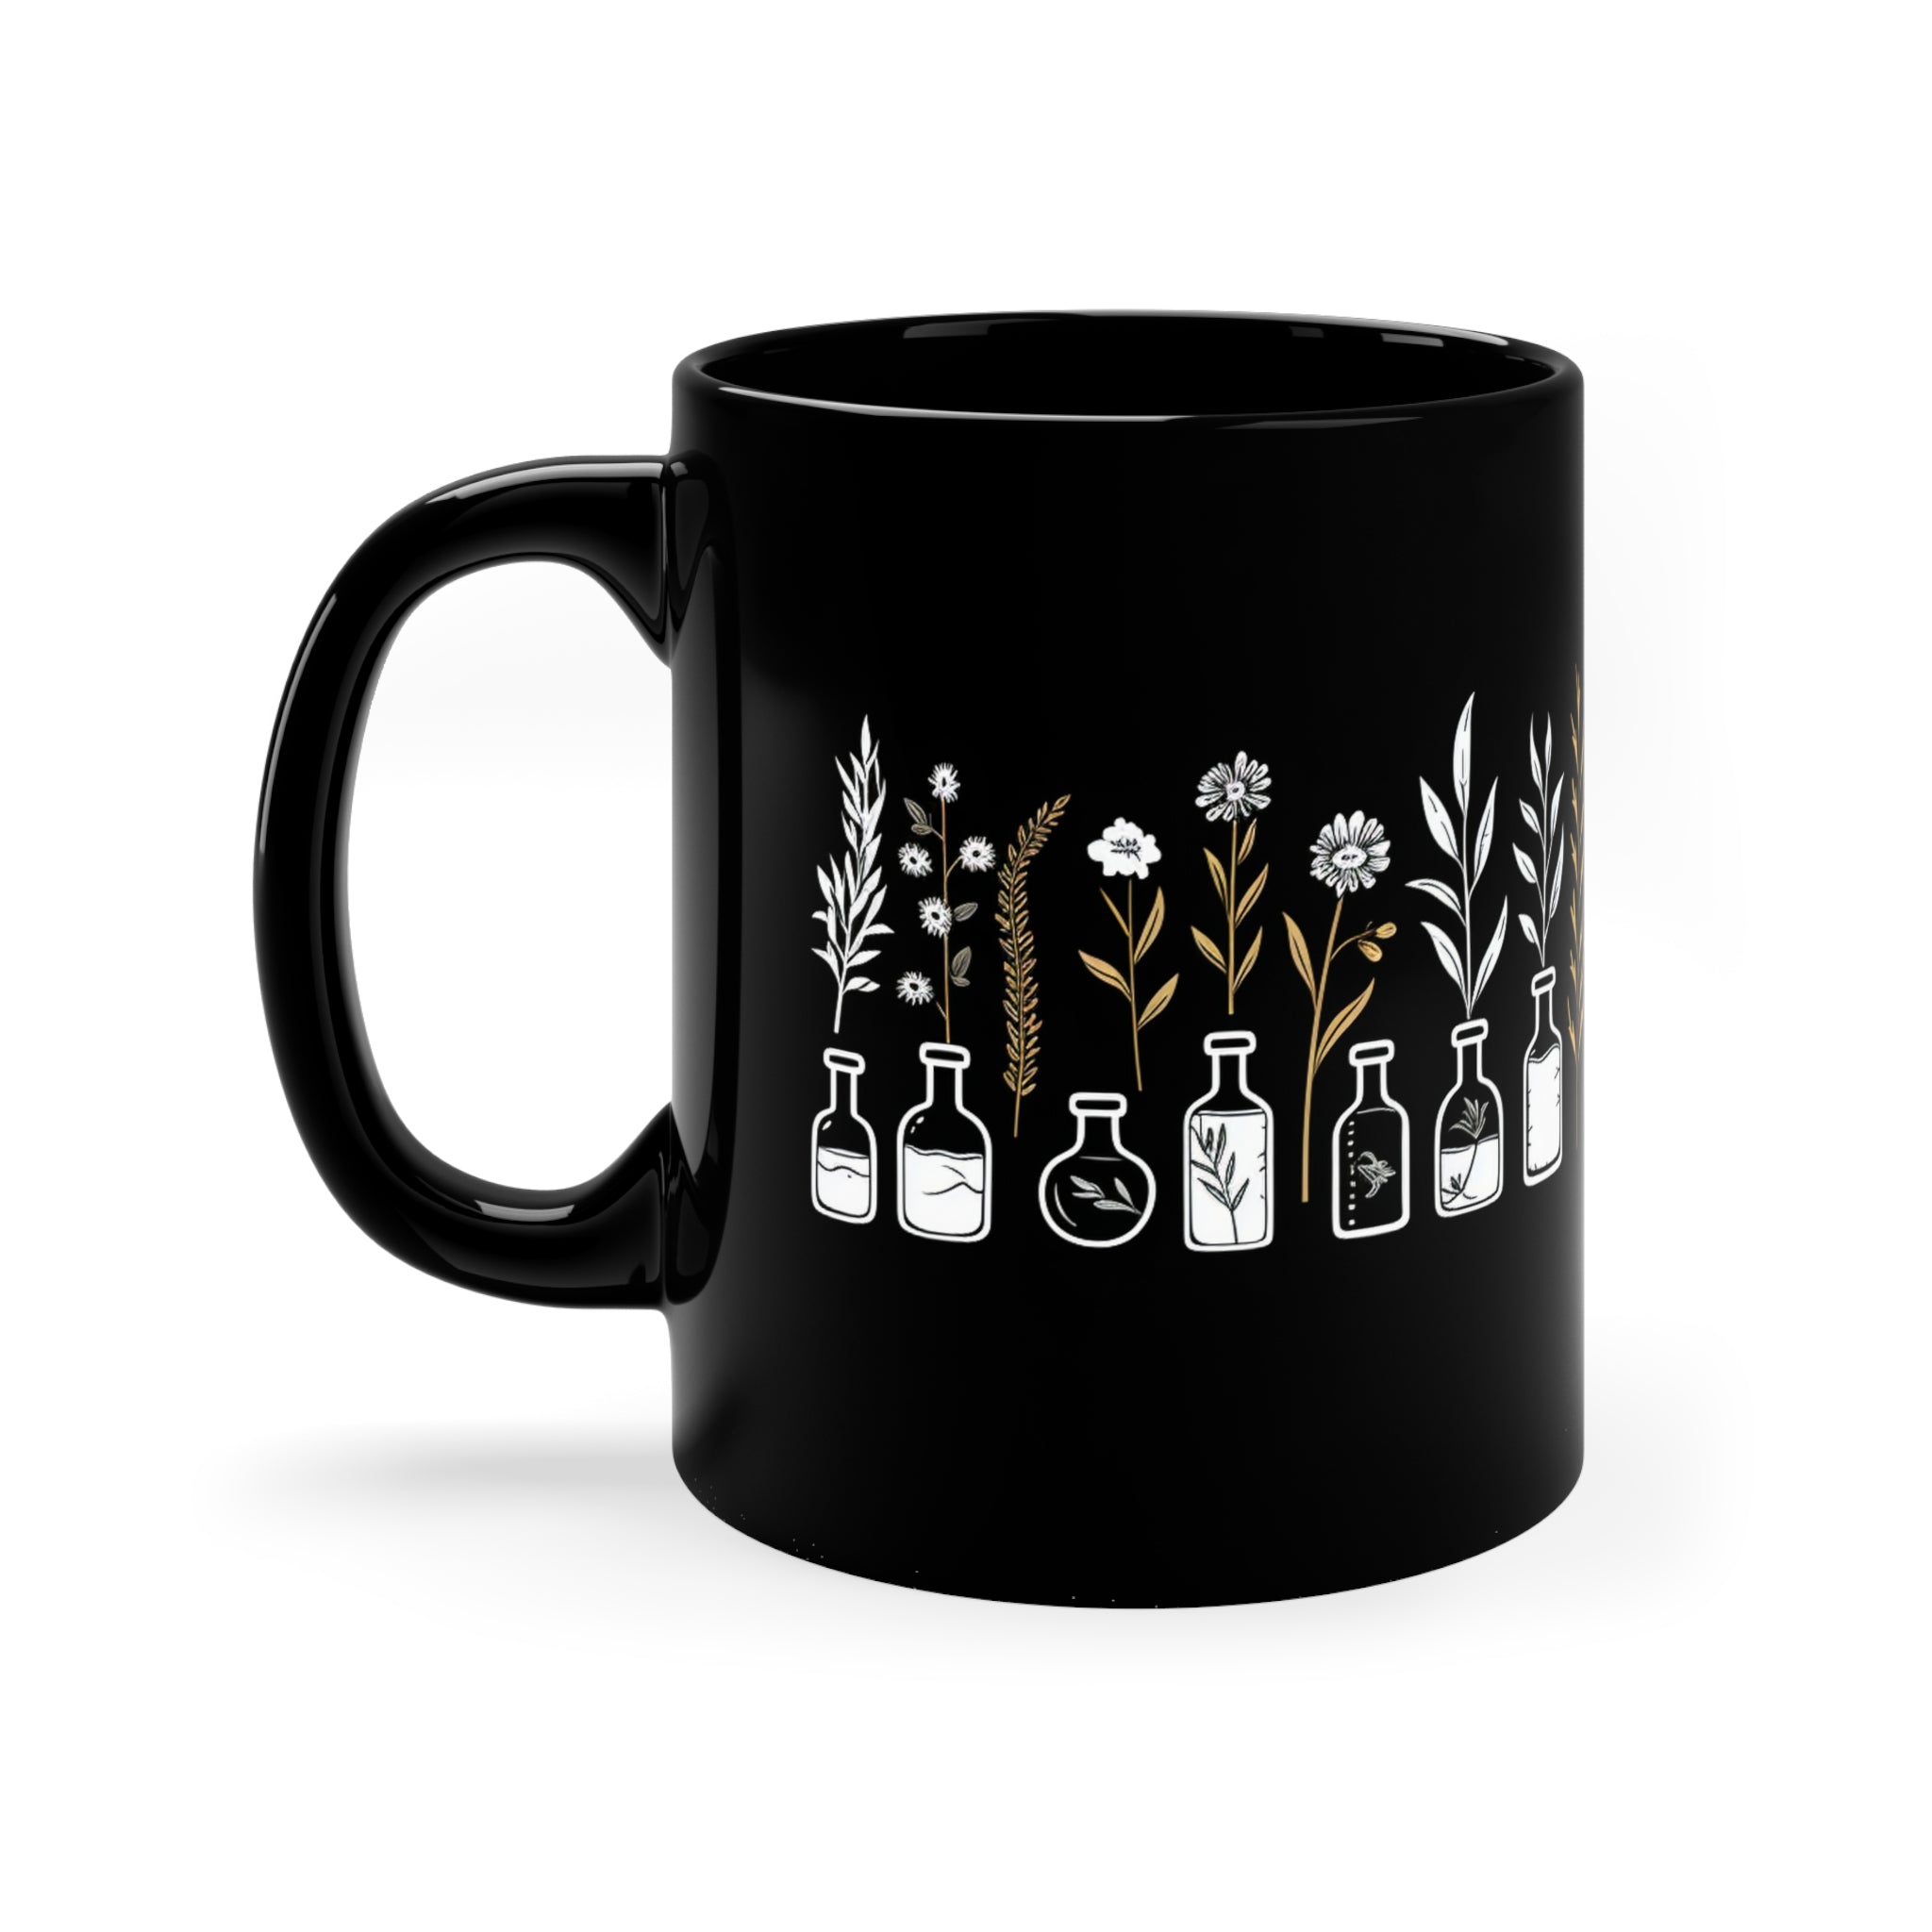 Cute Herbs and Potions Mug, Minimalistic Design, Minimal Potions and Herbs Mug, Cute Coffee Cup, Gamer Coffee Cup, Fantasy Mug